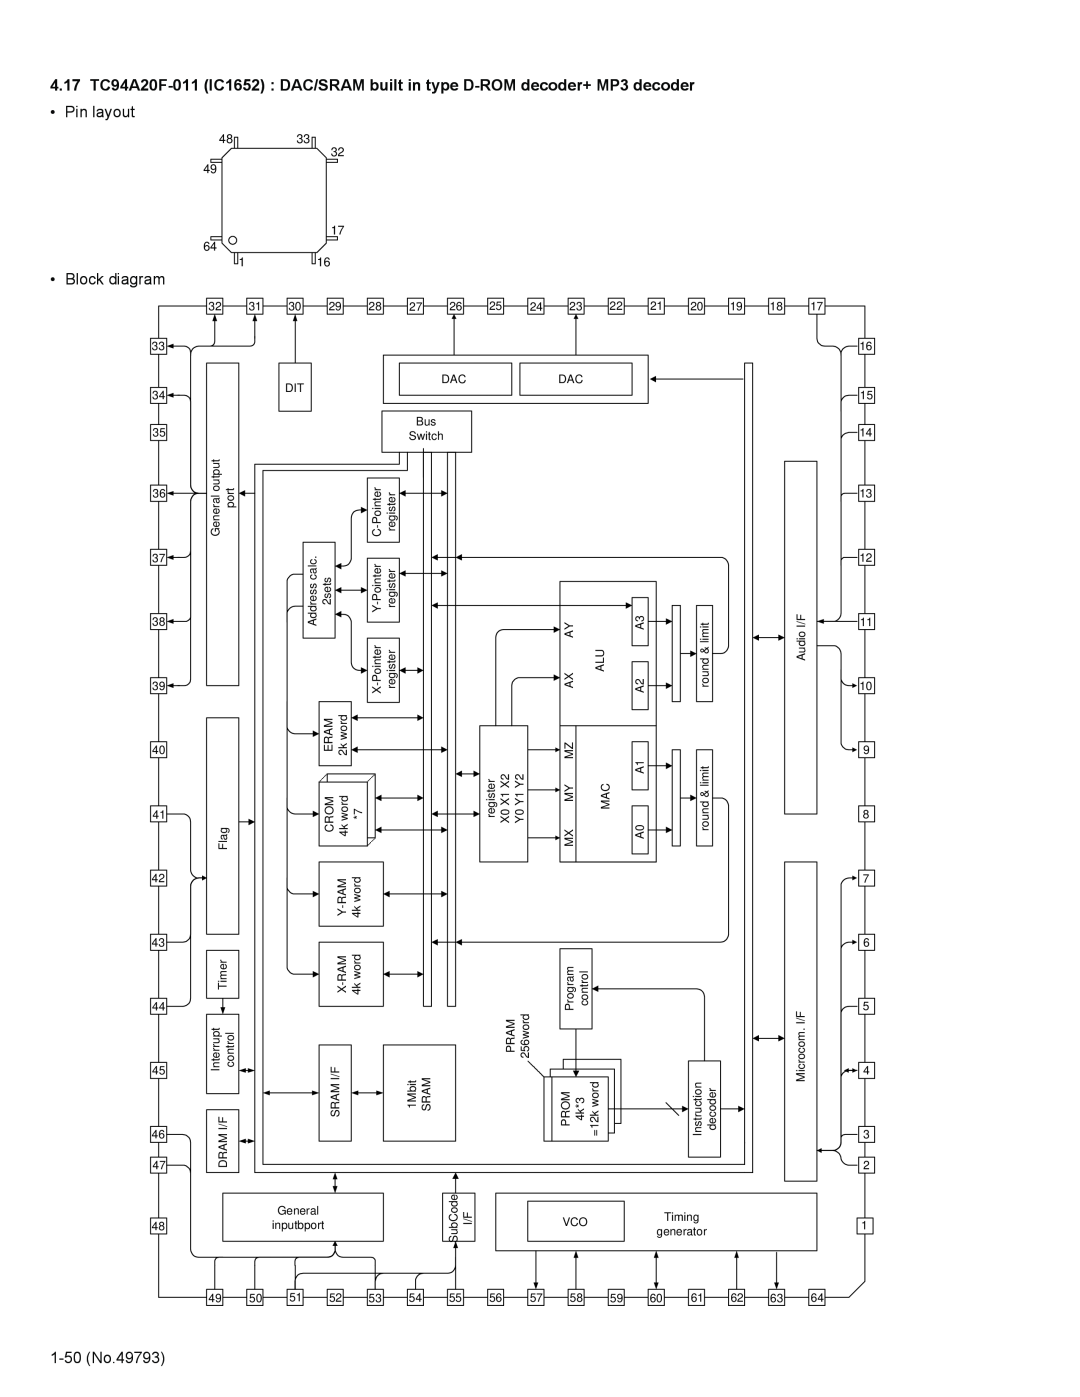 JVC KD-LX555R service manual Pin layout, Block diagram, 1-50No.49793 